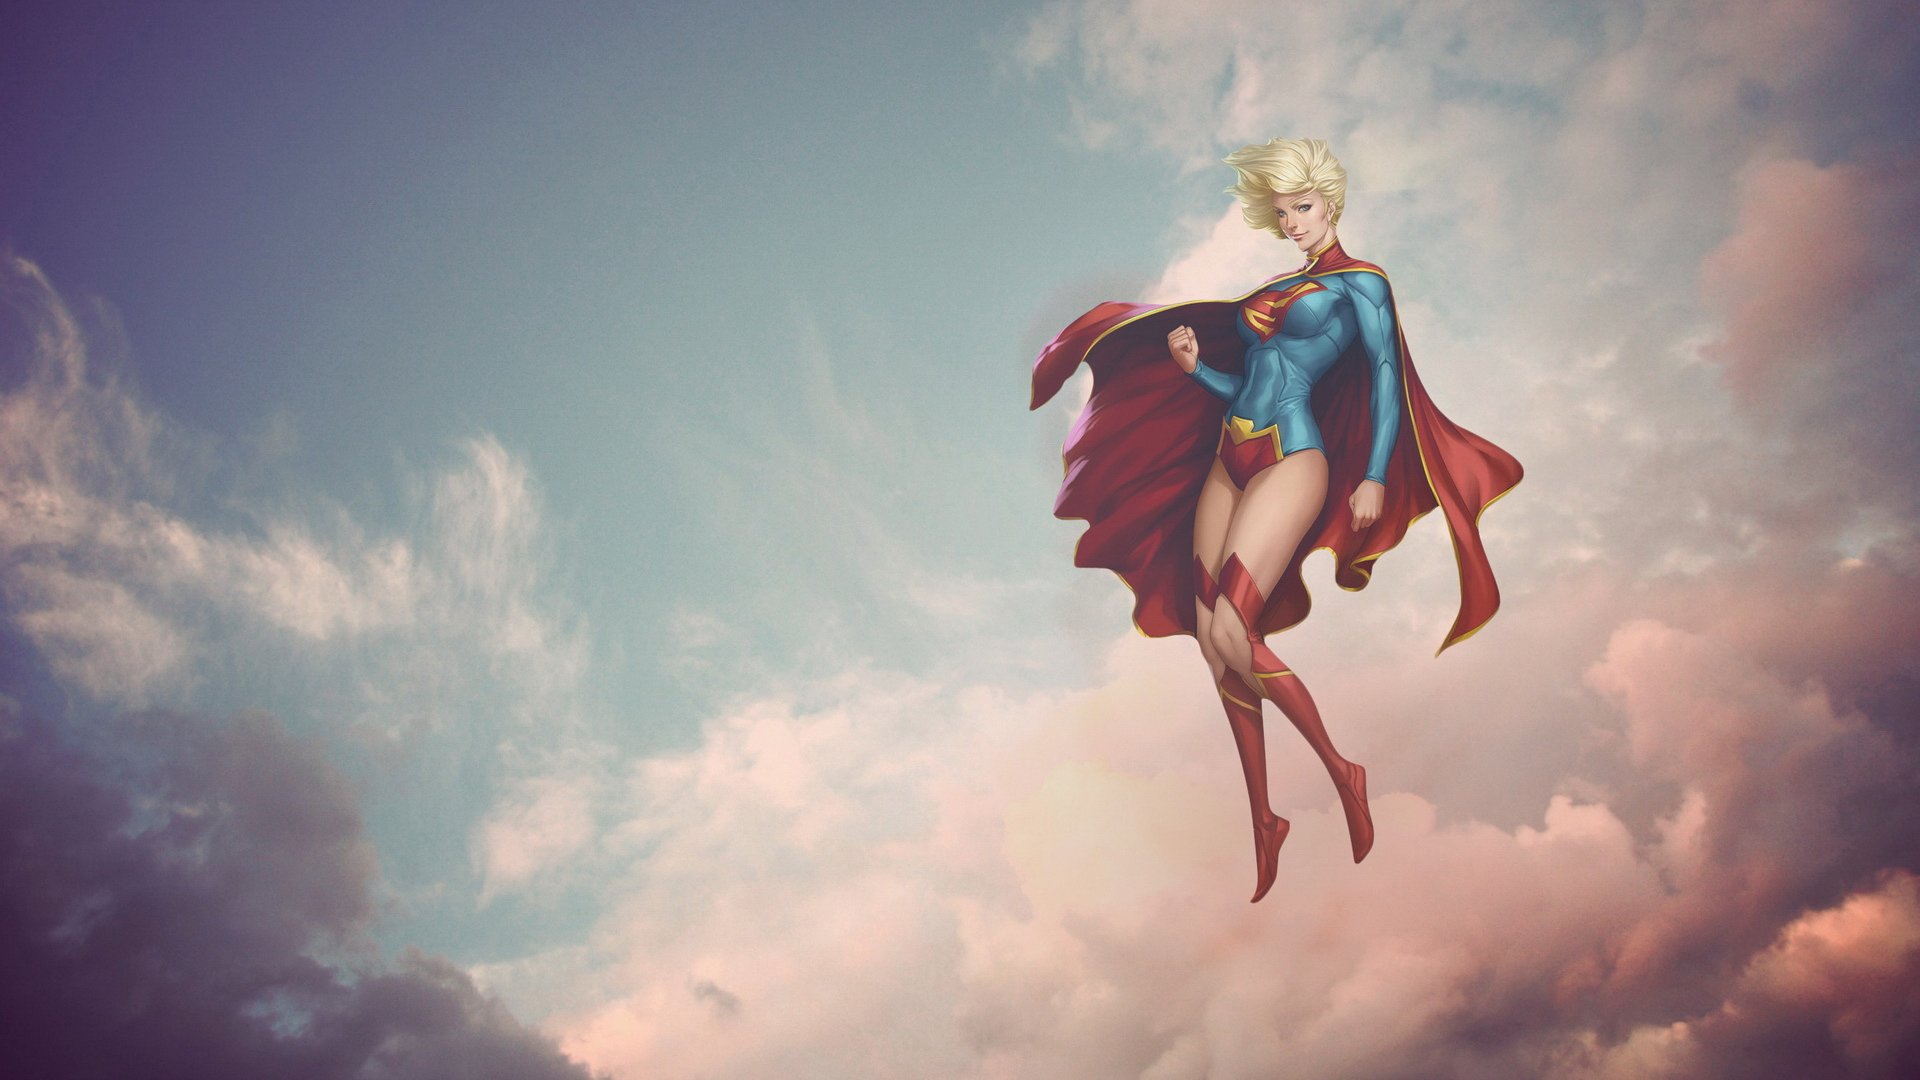 women, Blonde, Artgerm, Supergirl, Fantasy art, Sky, Clouds, Cape, Superhero, DC Comics, Superheroines Wallpaper